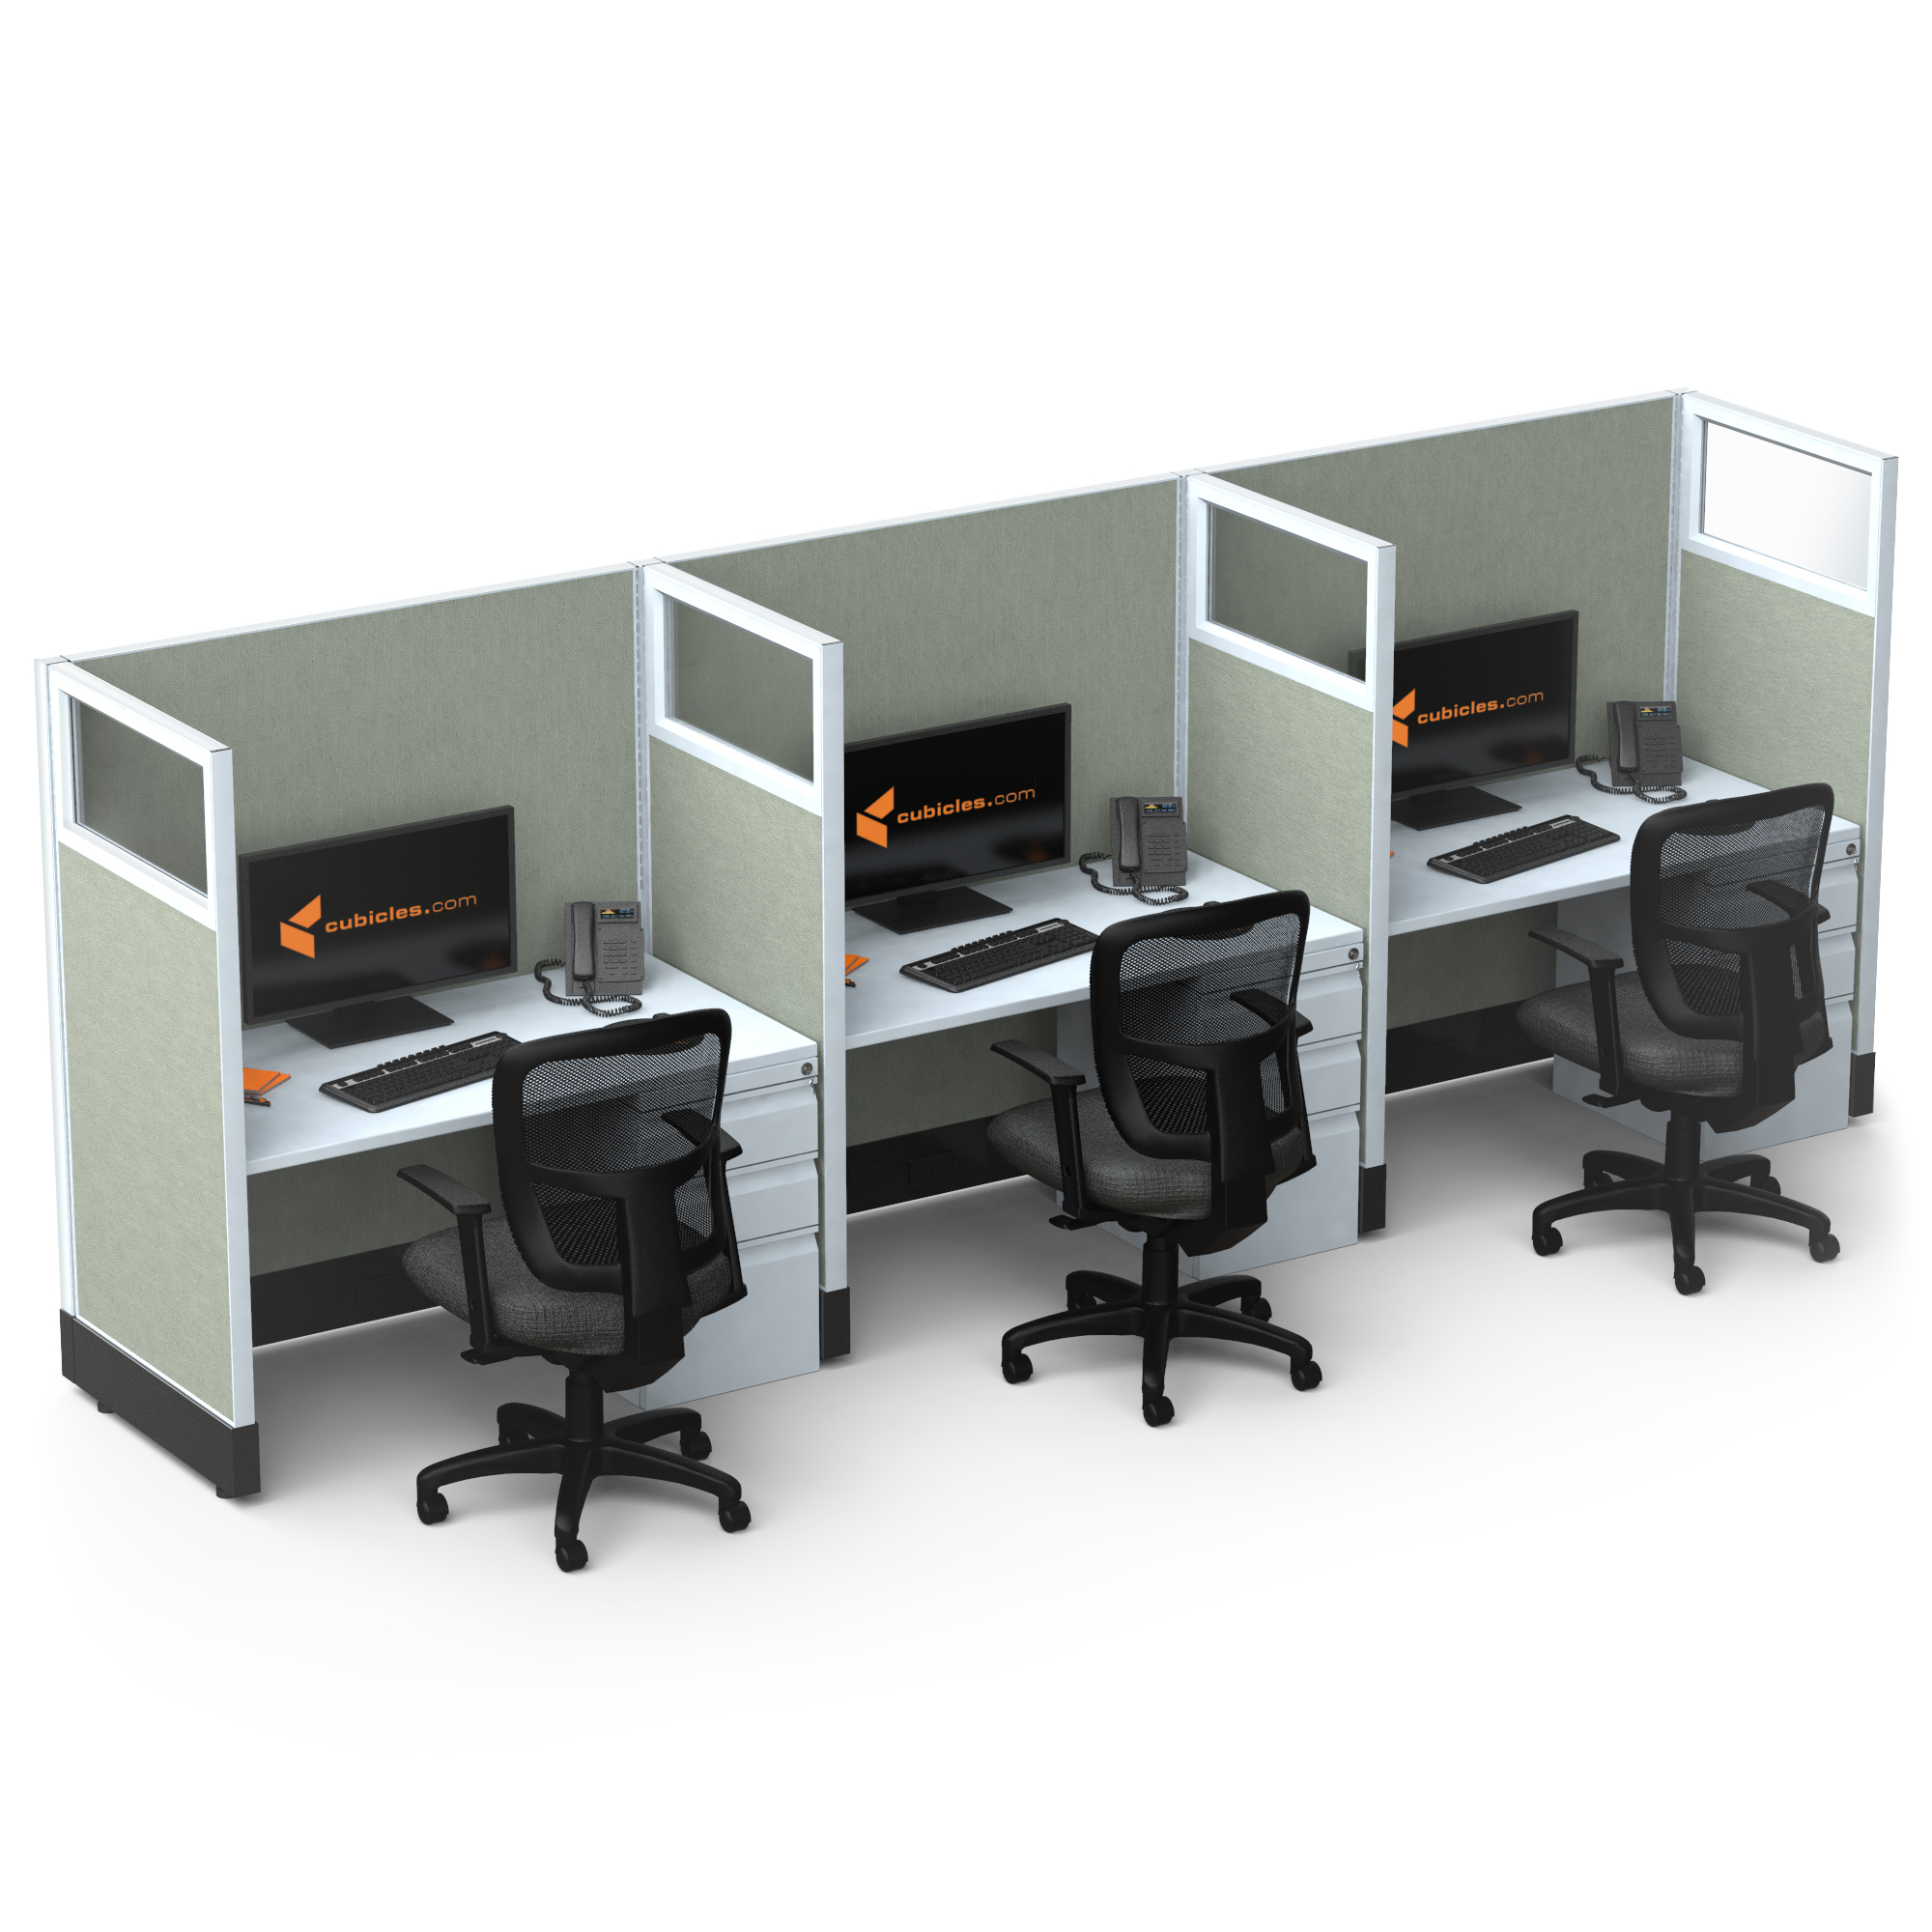 hot-desking-cubicle-workstations-3i-pack-powered.jpg